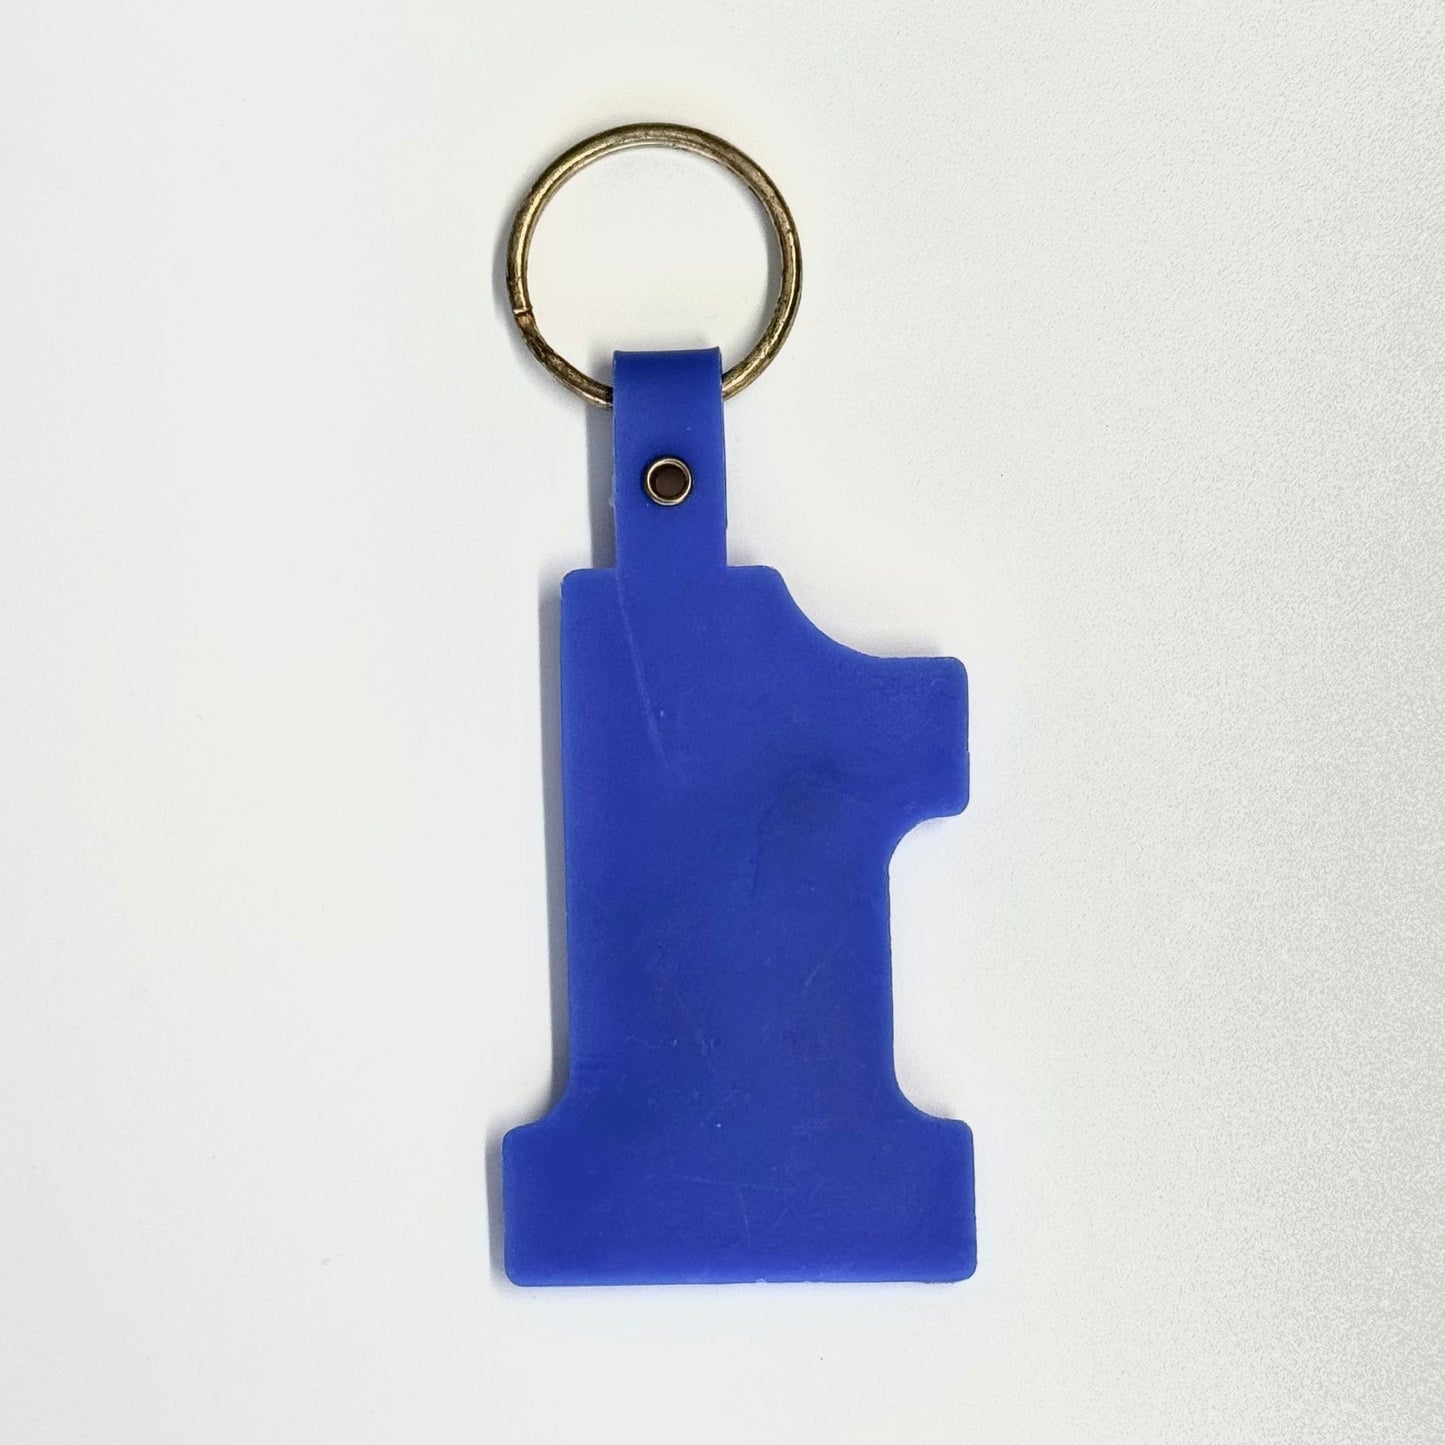 Vintage ‘IAM - Machinists’ Keychain Key Ring Blue Plastic #1, Local 777